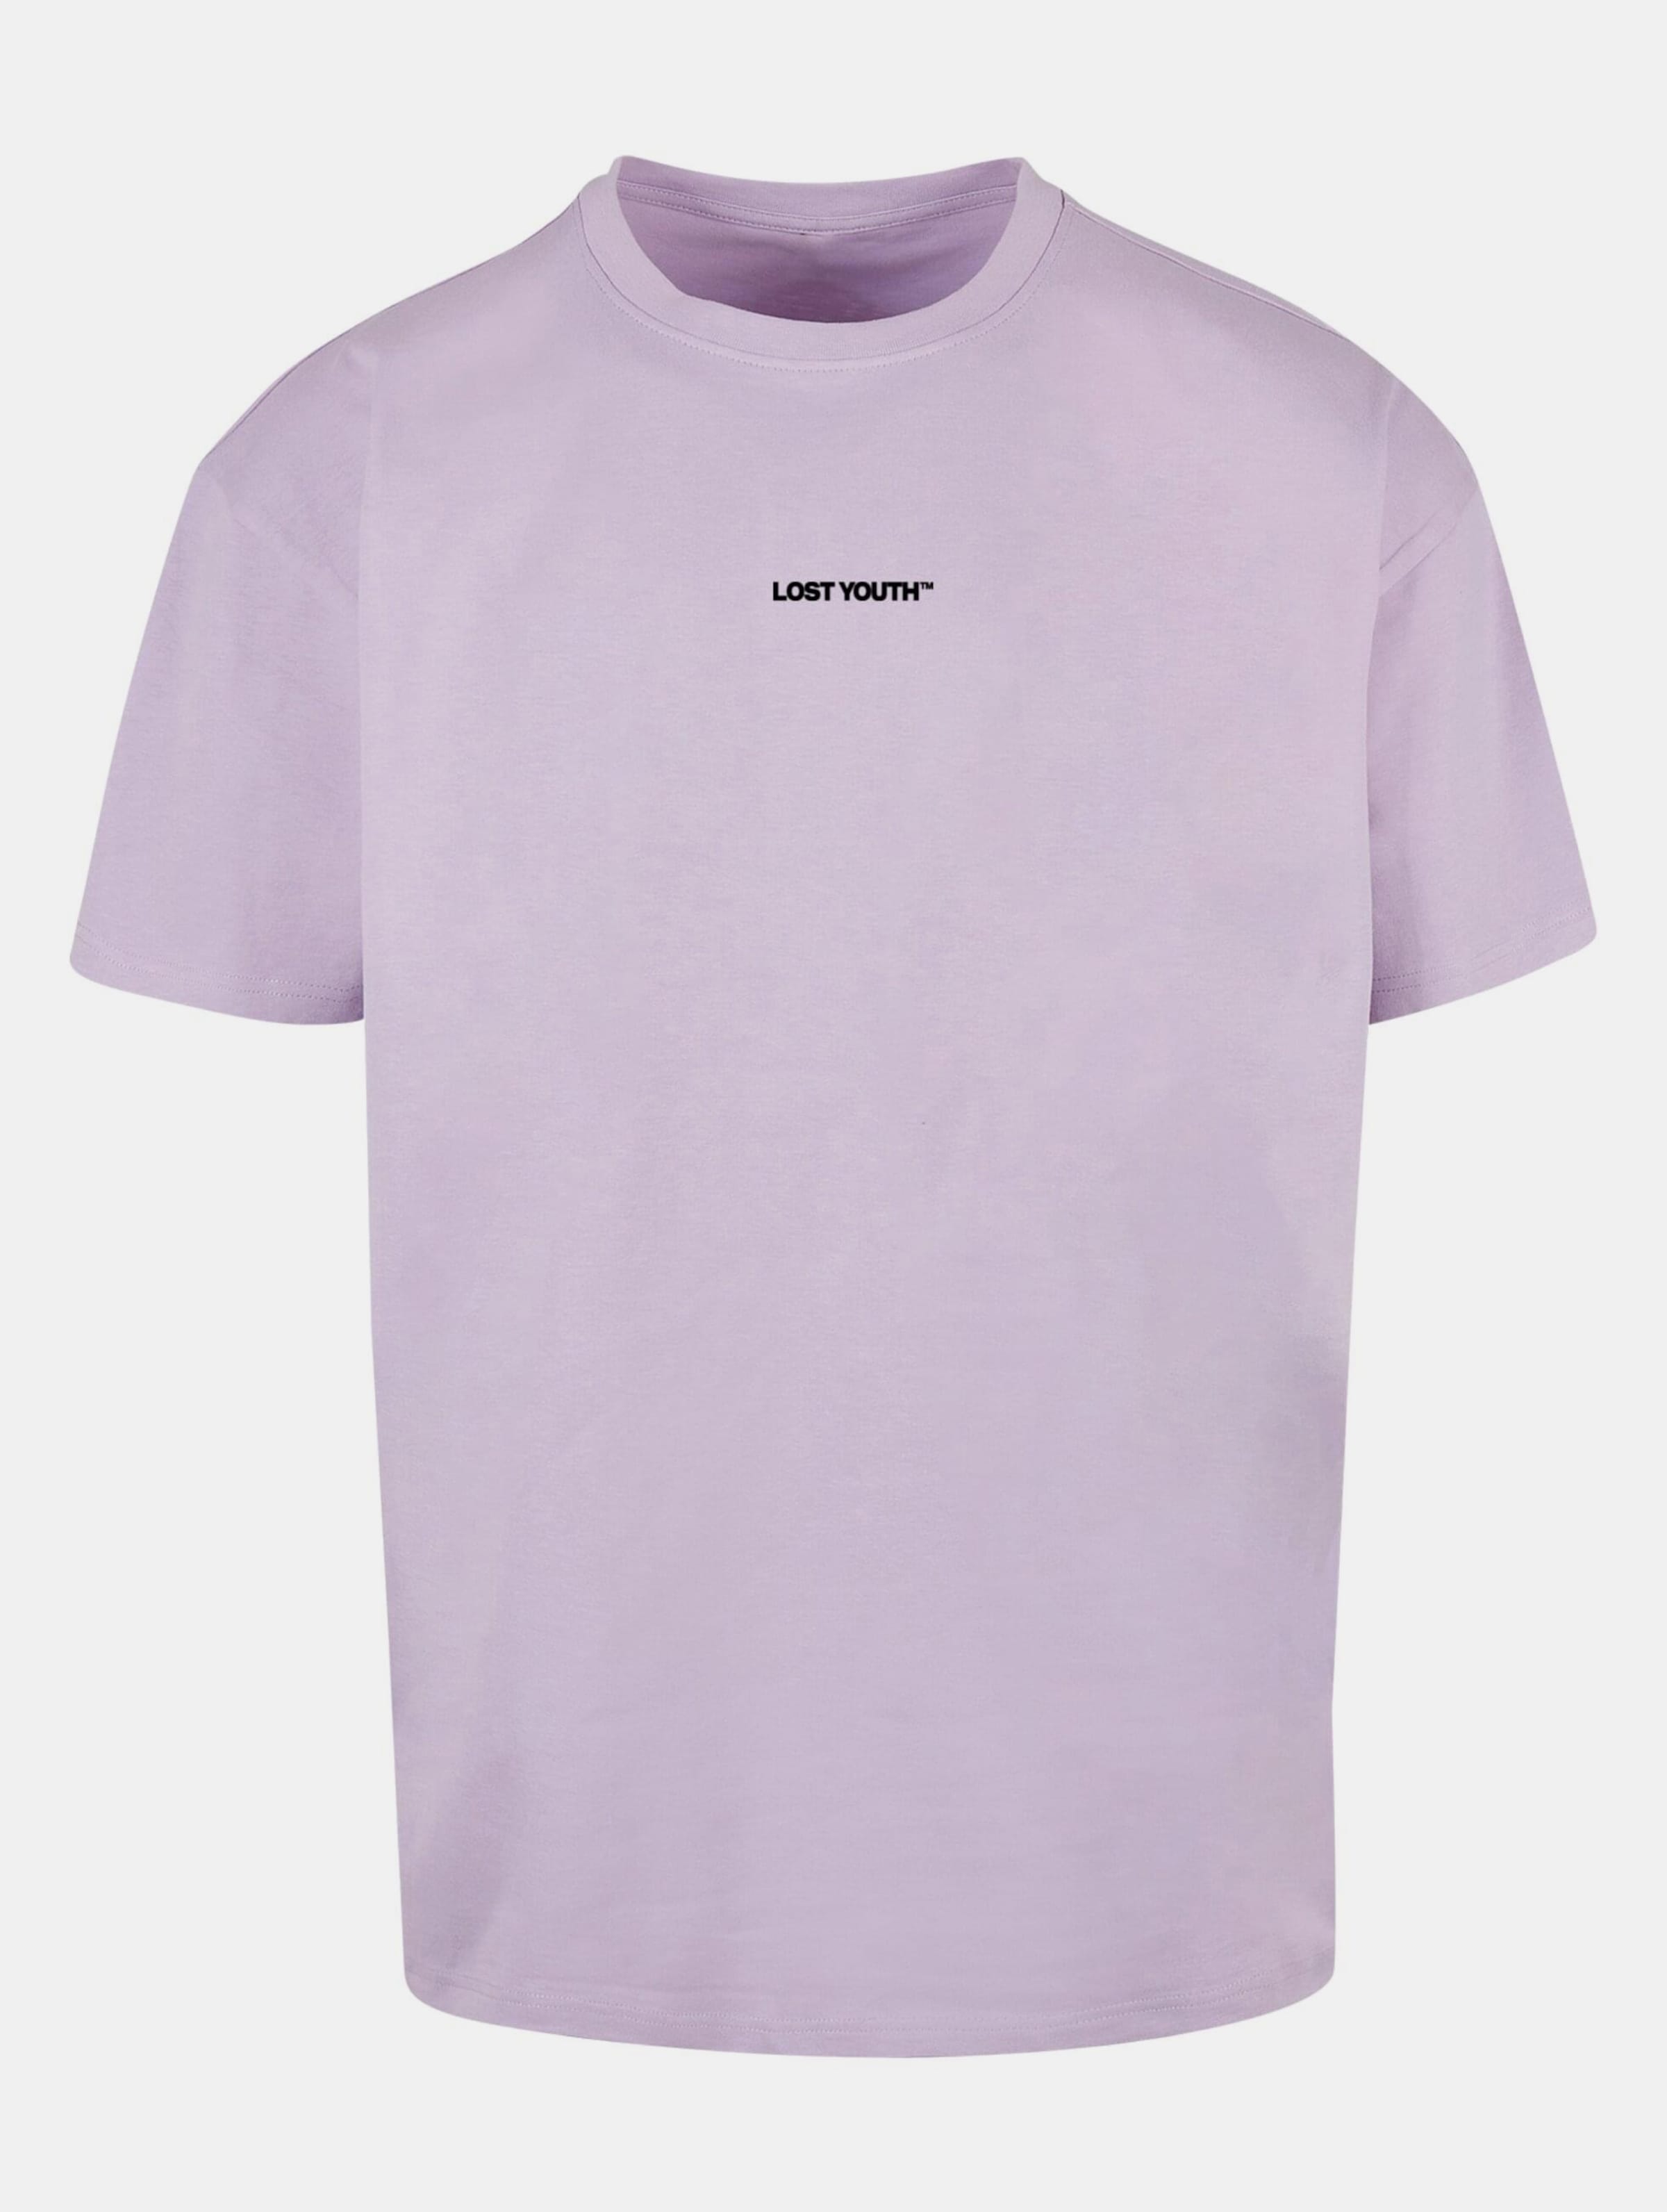 Lost Youth Chaos T-Shirts Männer,Unisex op kleur violet, Maat XL